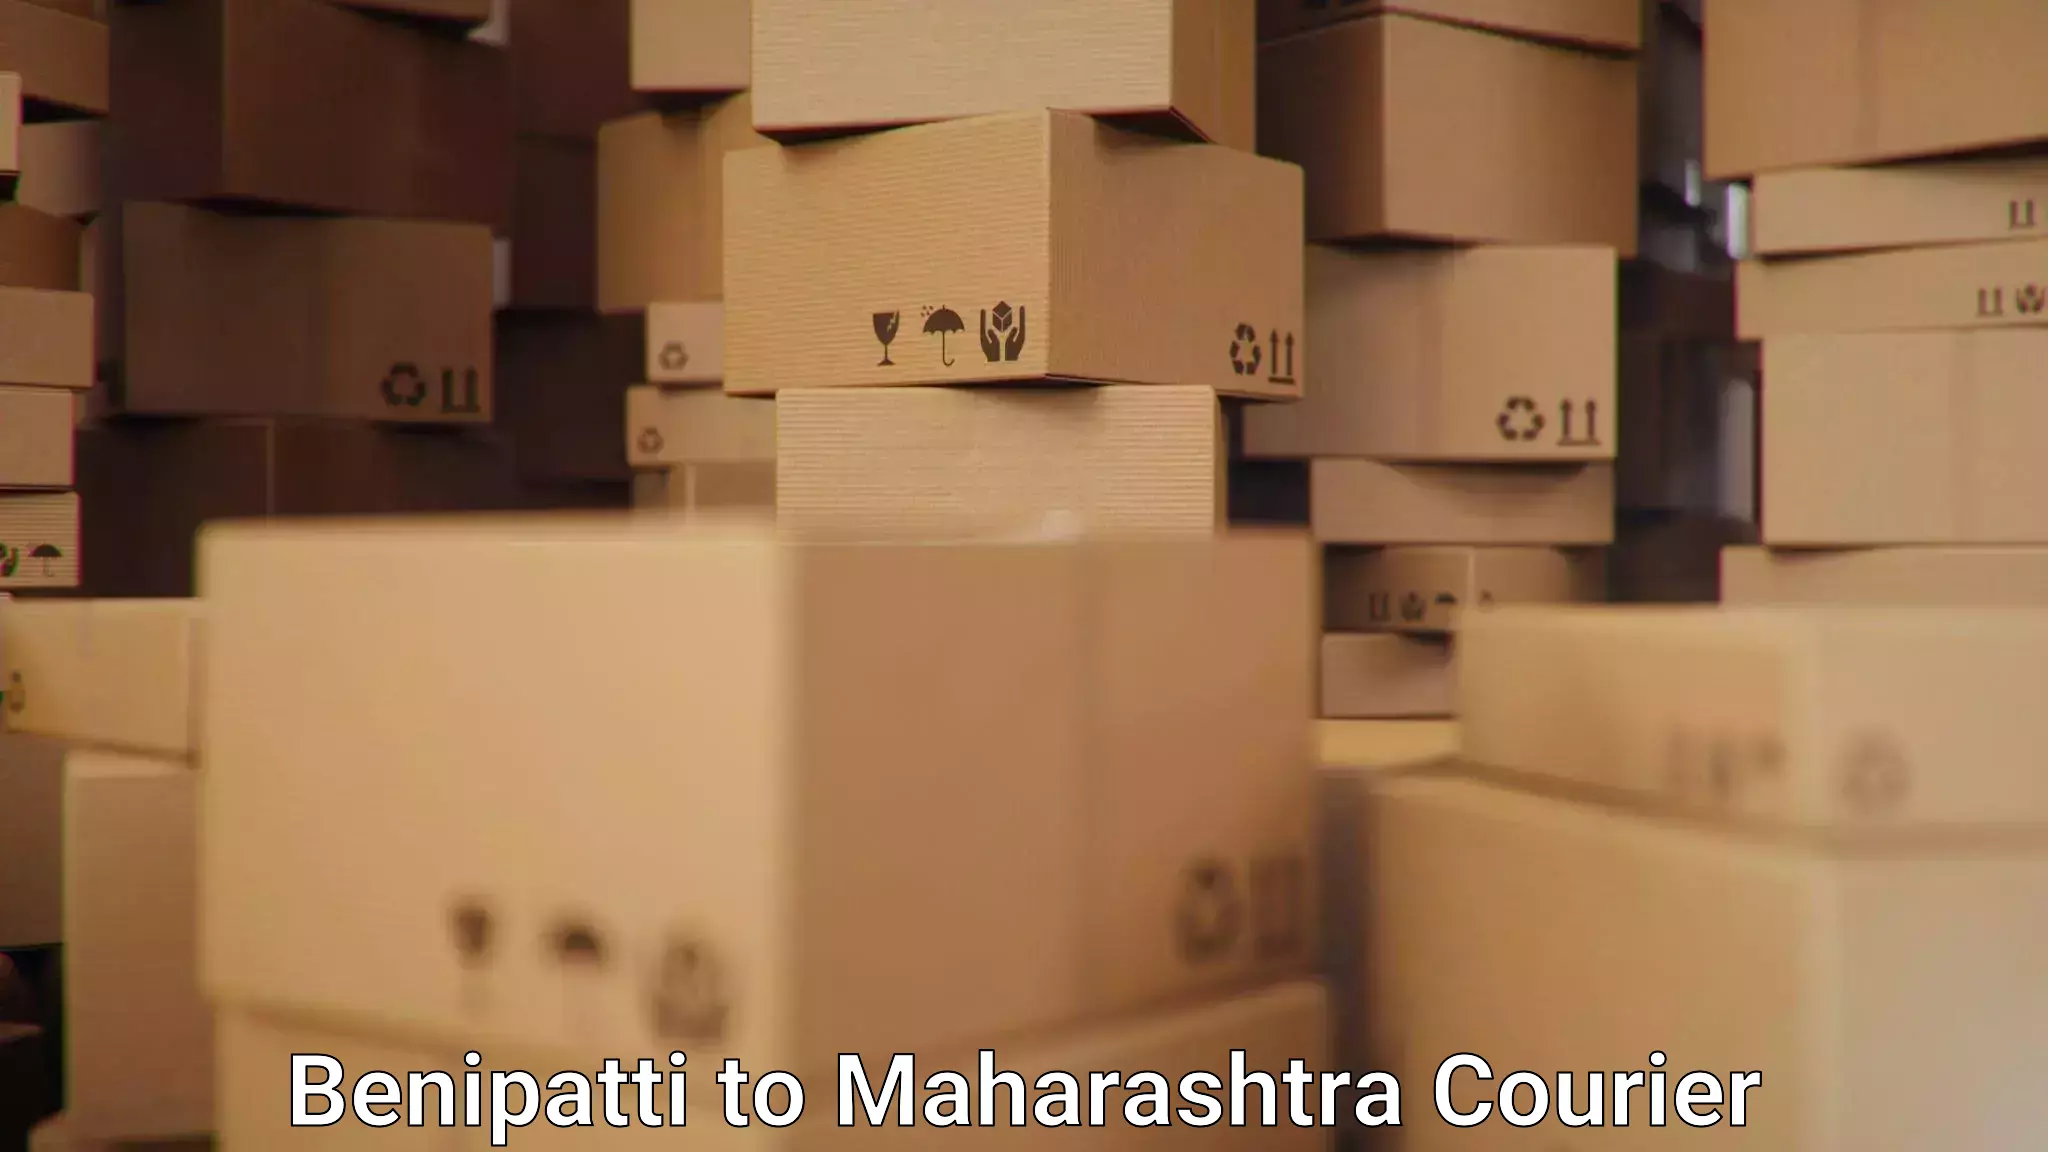 Tailored shipping plans Benipatti to IIIT Pune